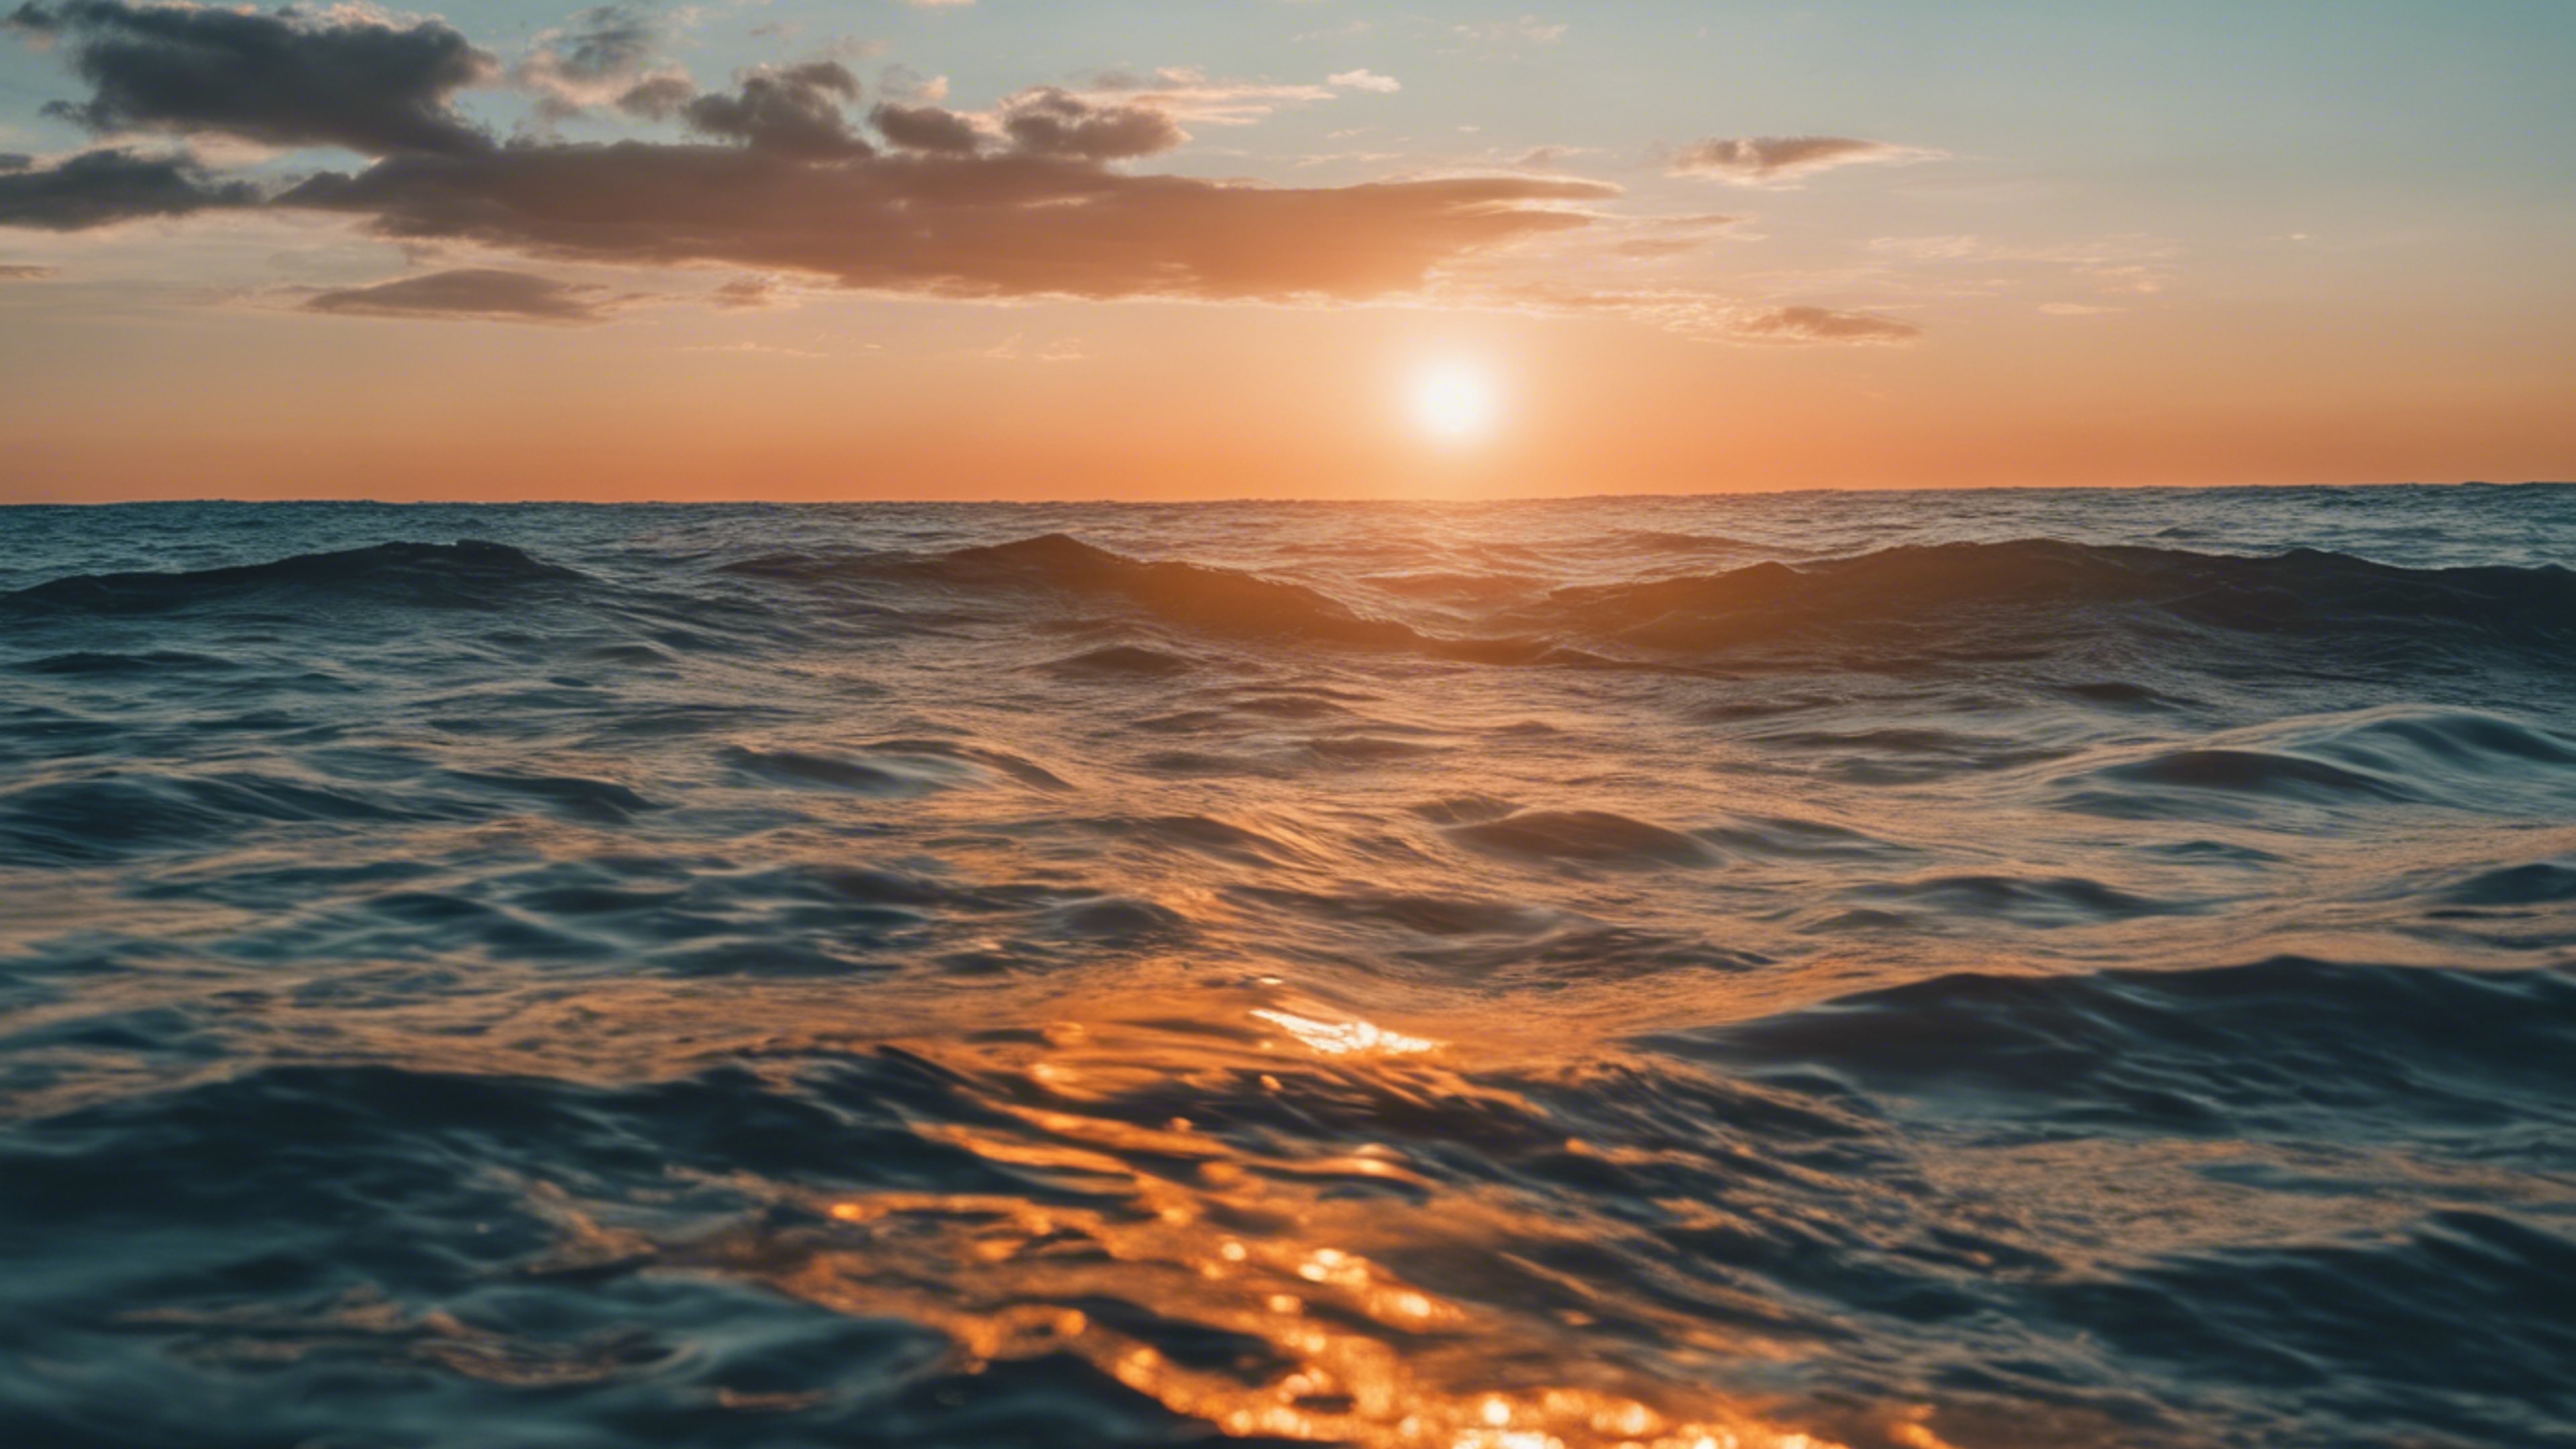 A sunset scene with orange sun setting in the cool blue ocean. Дэлгэцийн зураг[7965154be6e2421b8d94]